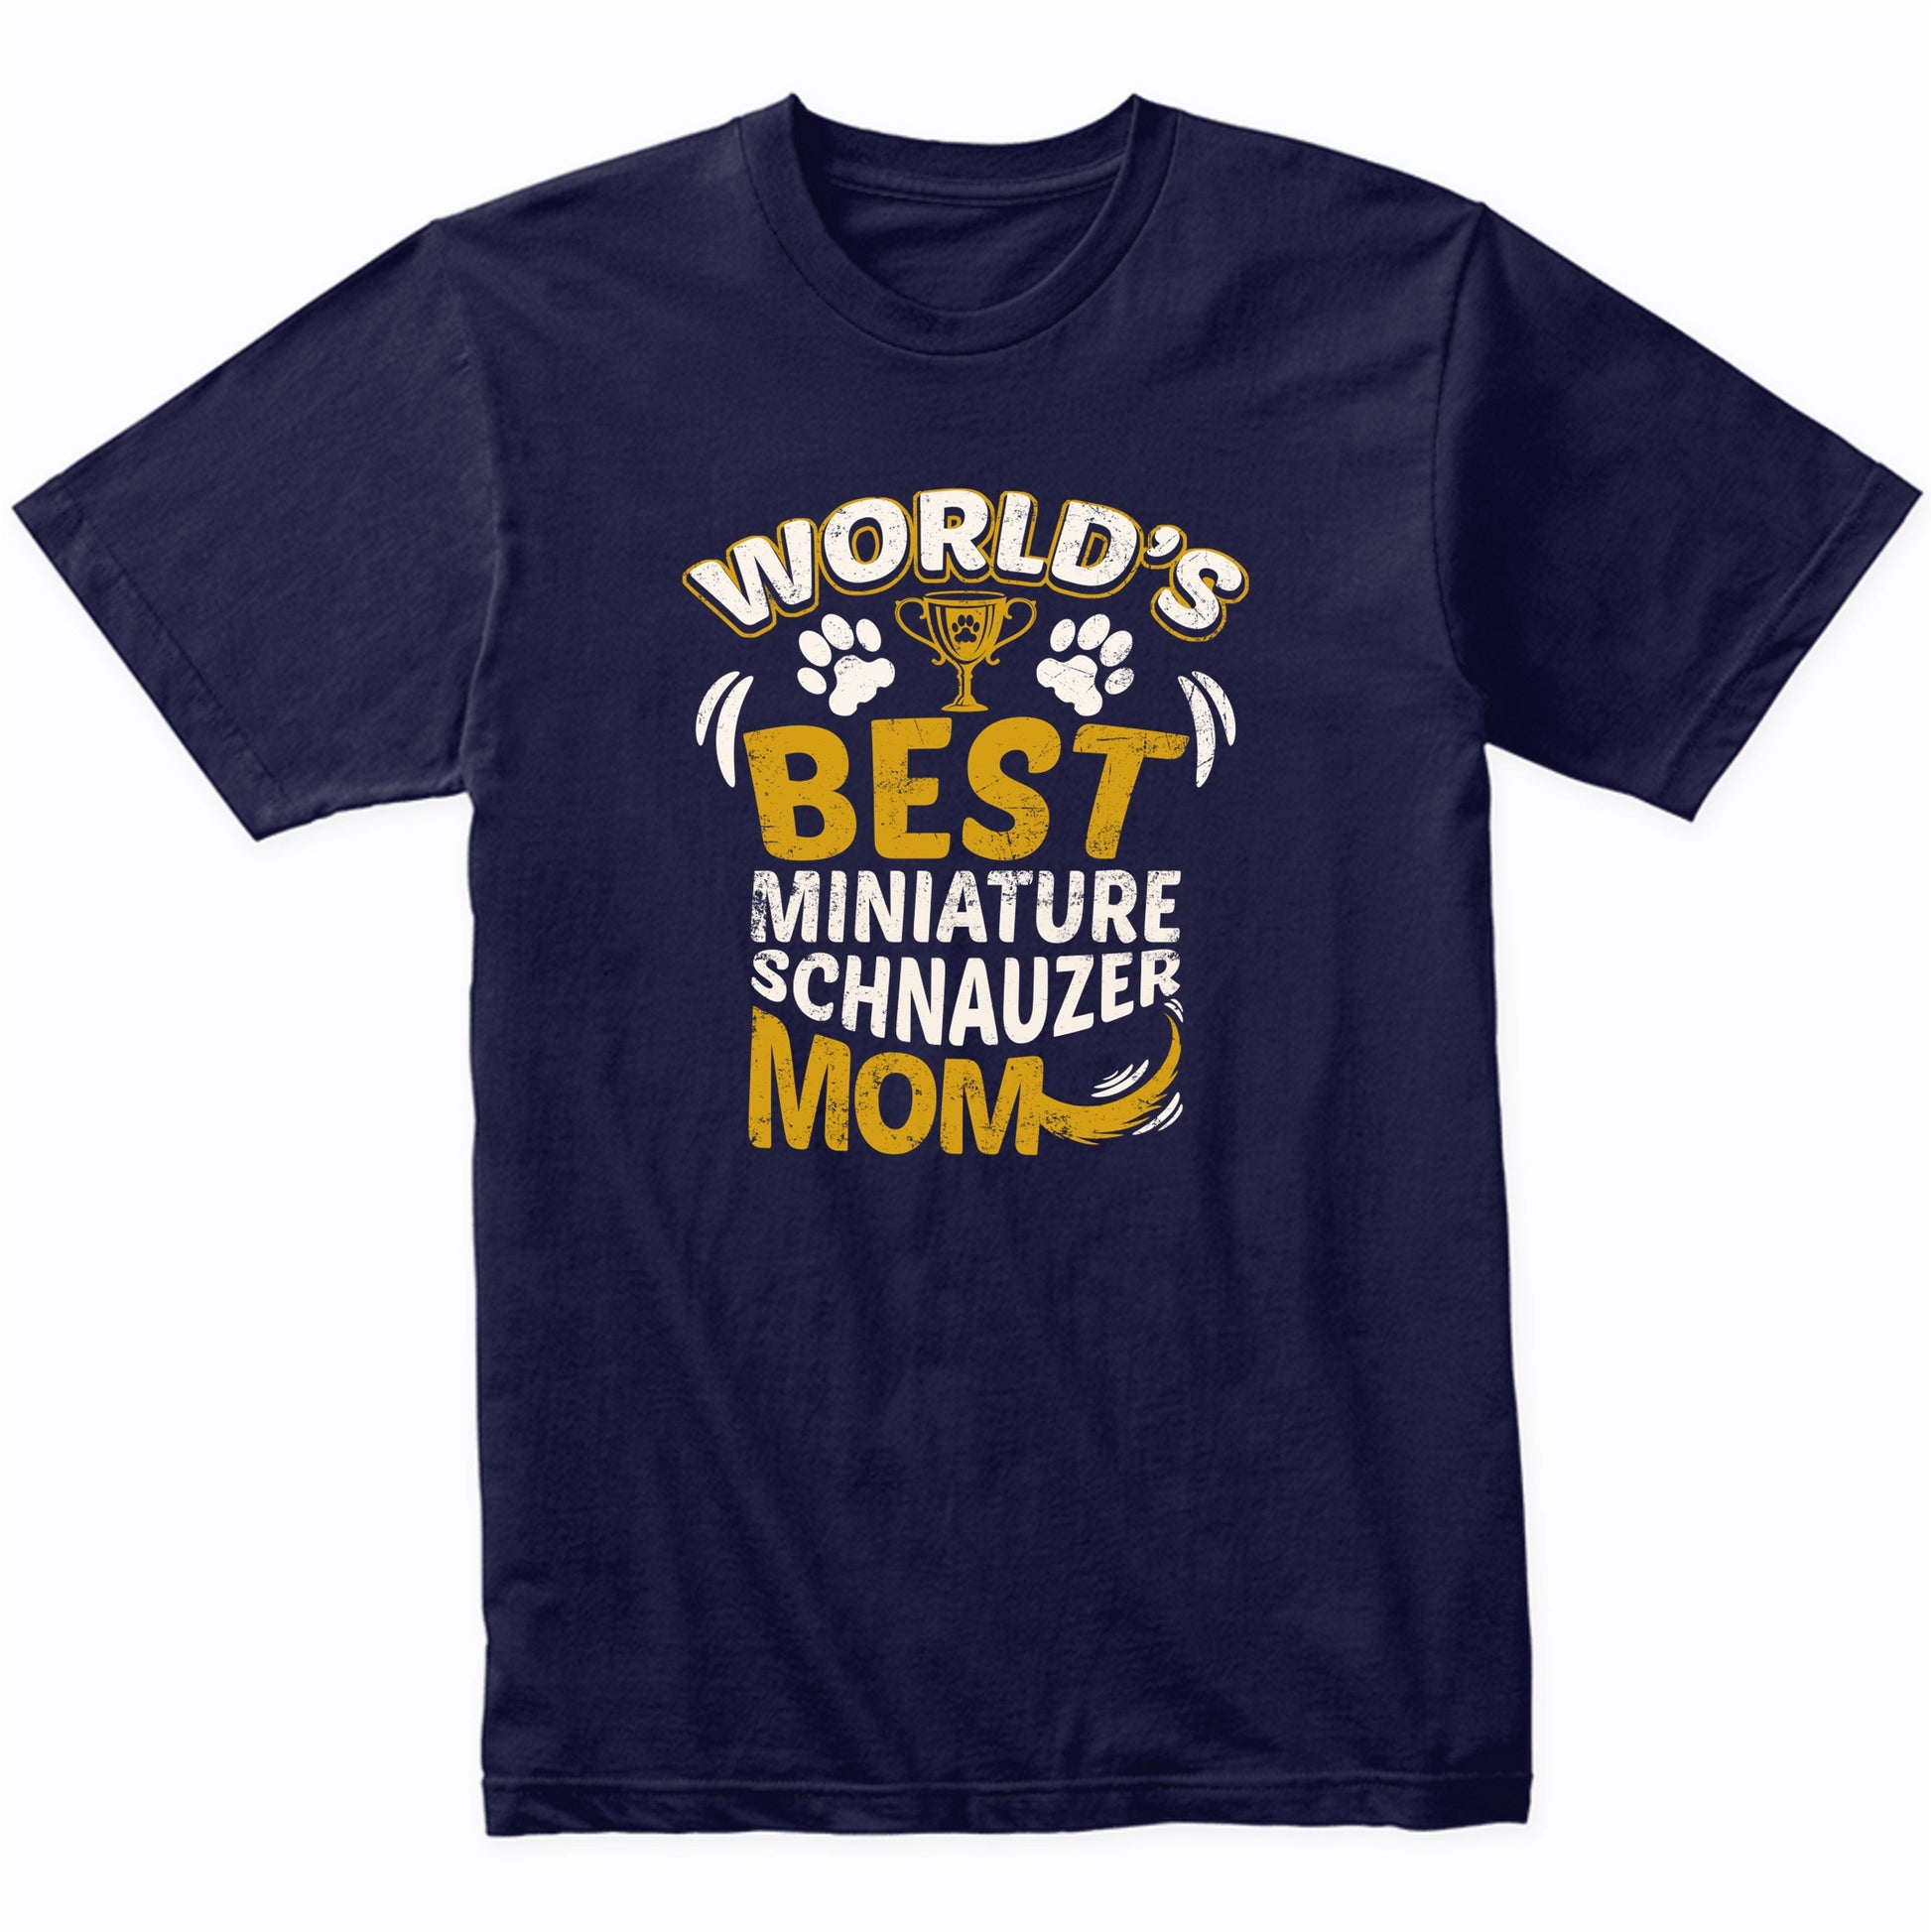 World's Best Miniature Schnauzer Mom Graphic T-Shirt